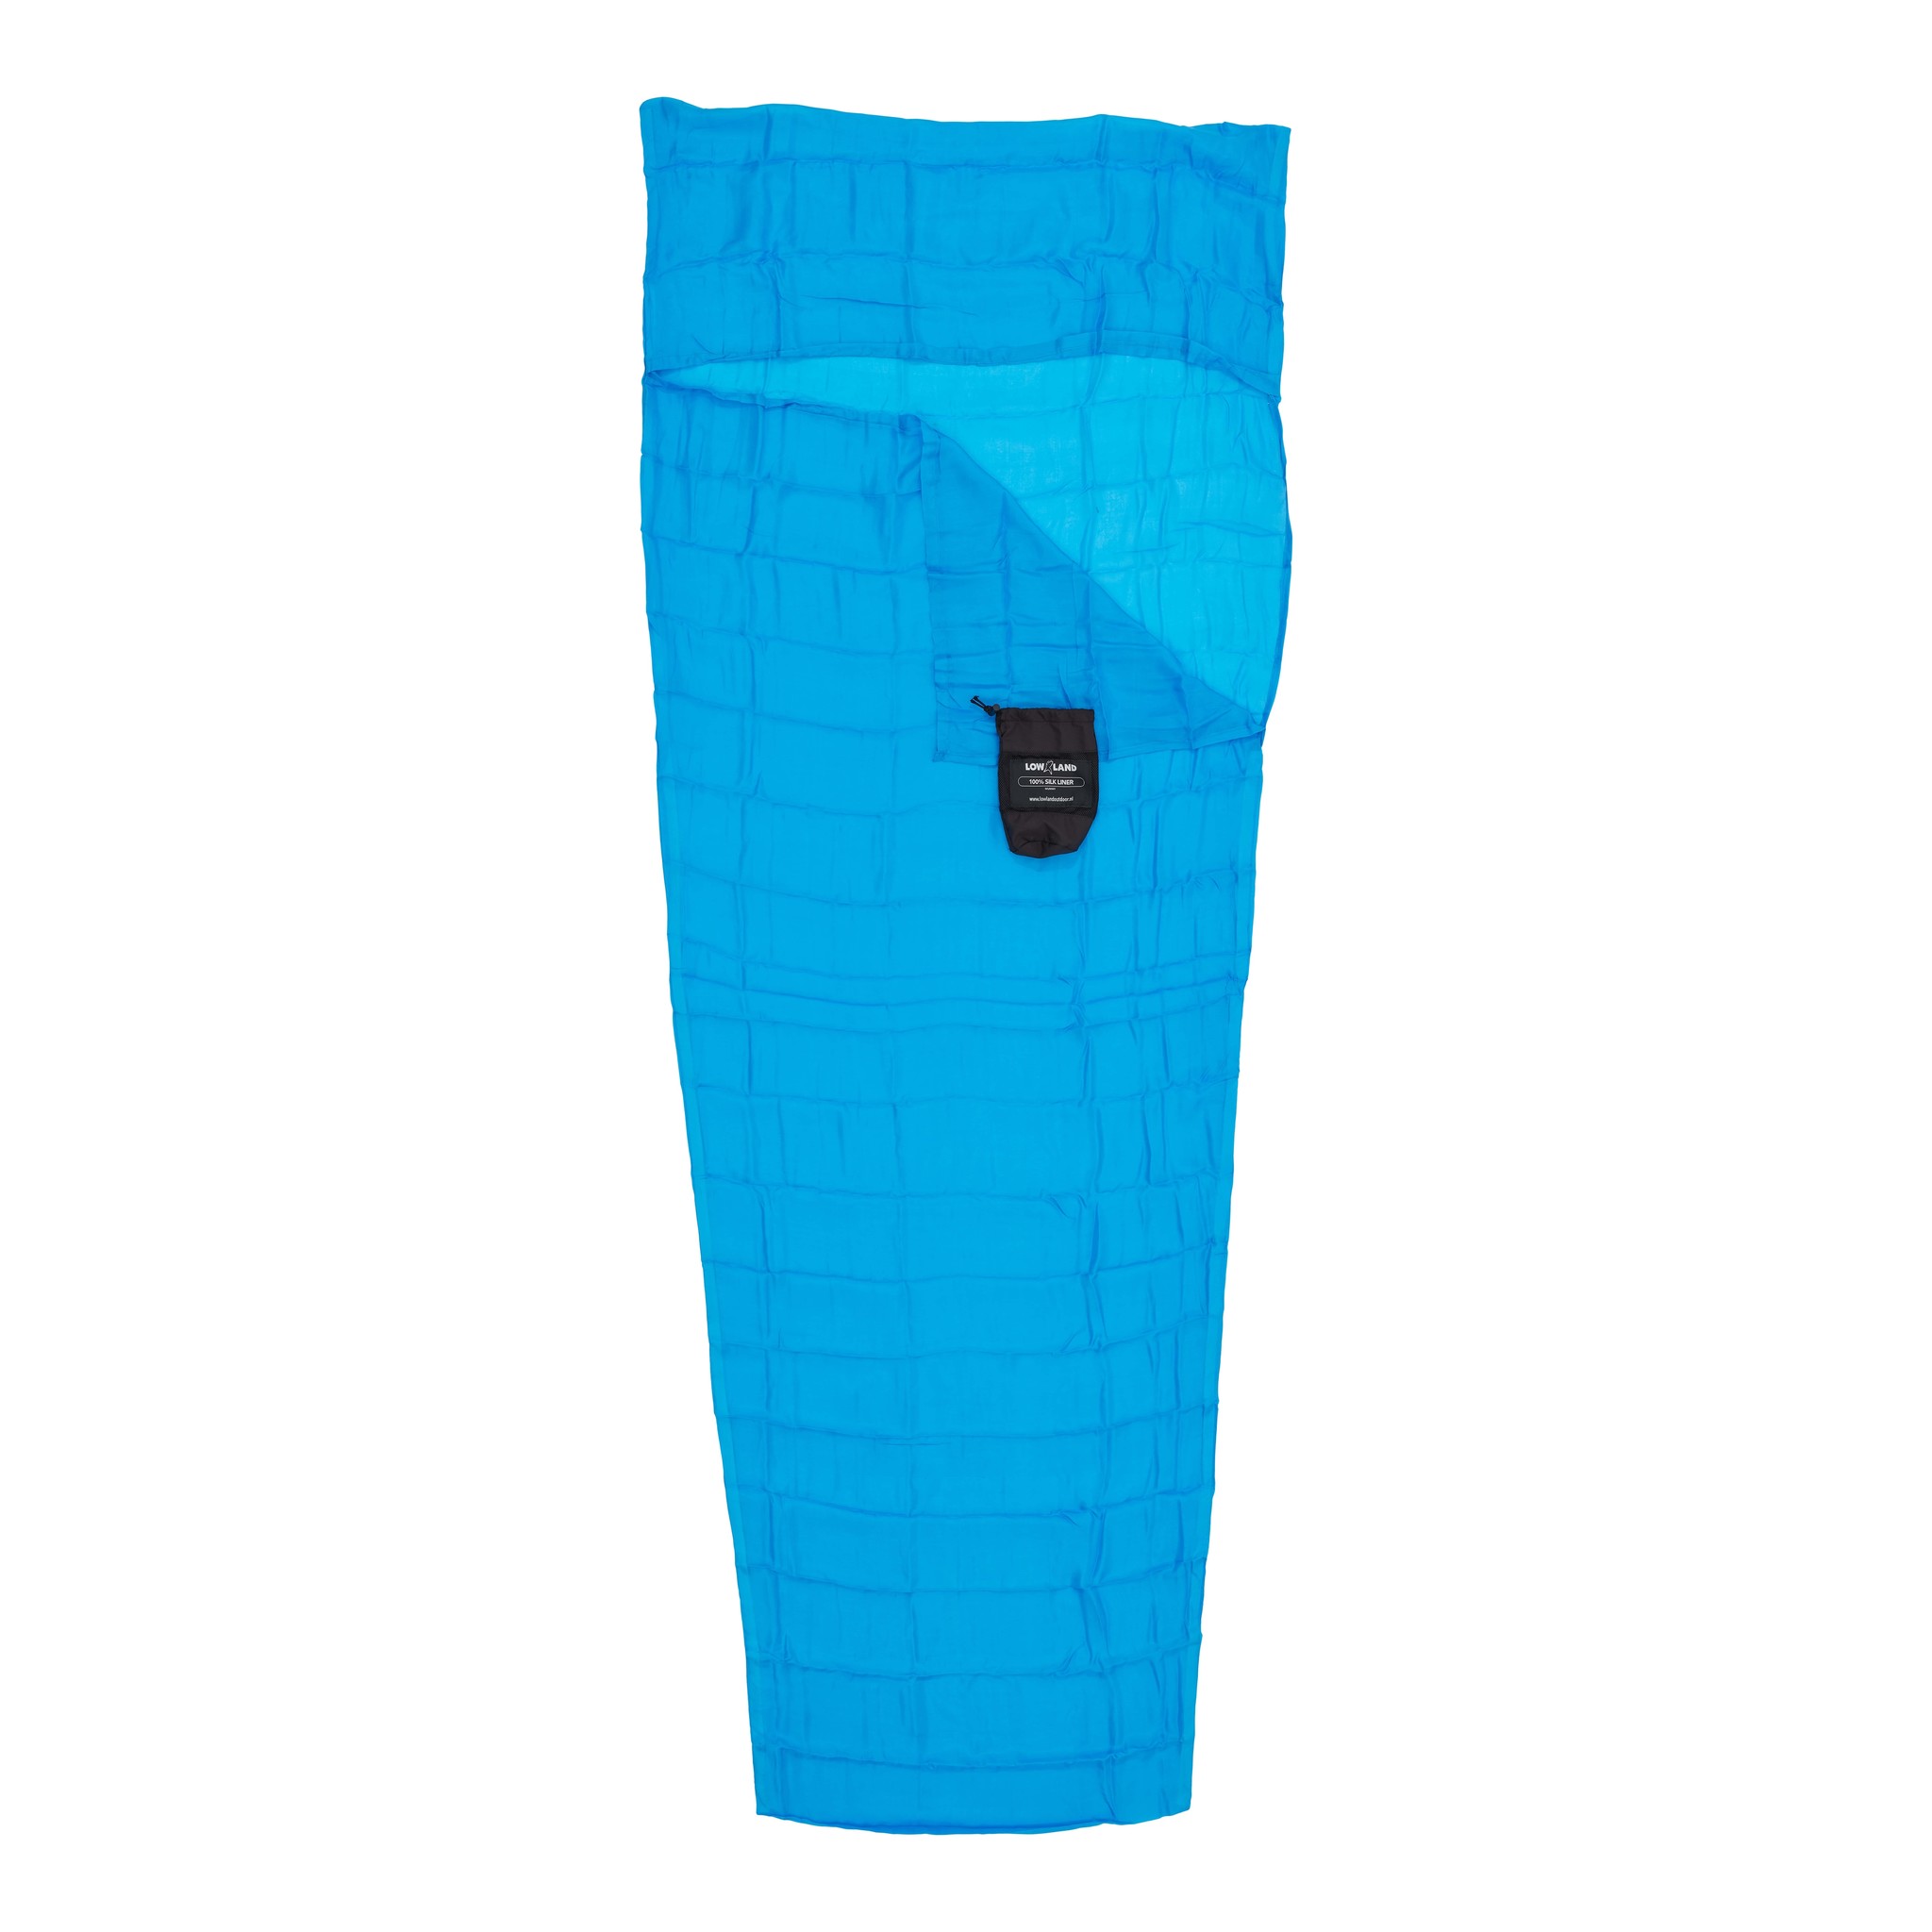 LOWLAND OUTDOOR® Sleeping bag liner - 100% Silk - mummy - 220x80 